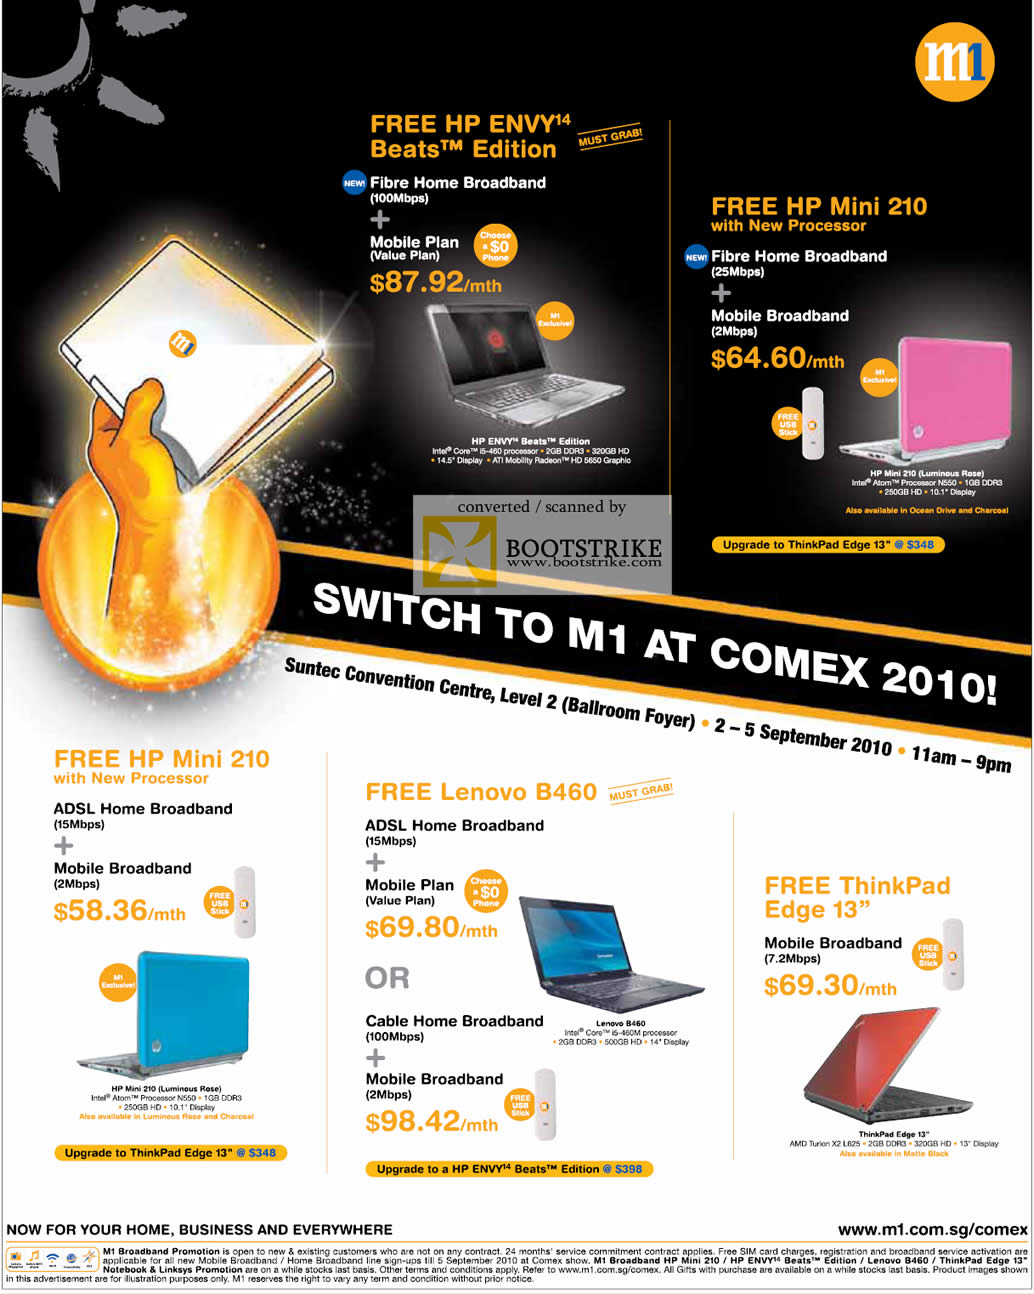 Comex 2010 price list image brochure of M1 Free HP Envy Beats Fibre Home Broadband HP Mini 120 Lenovo B460 ThinkPad Edge 13